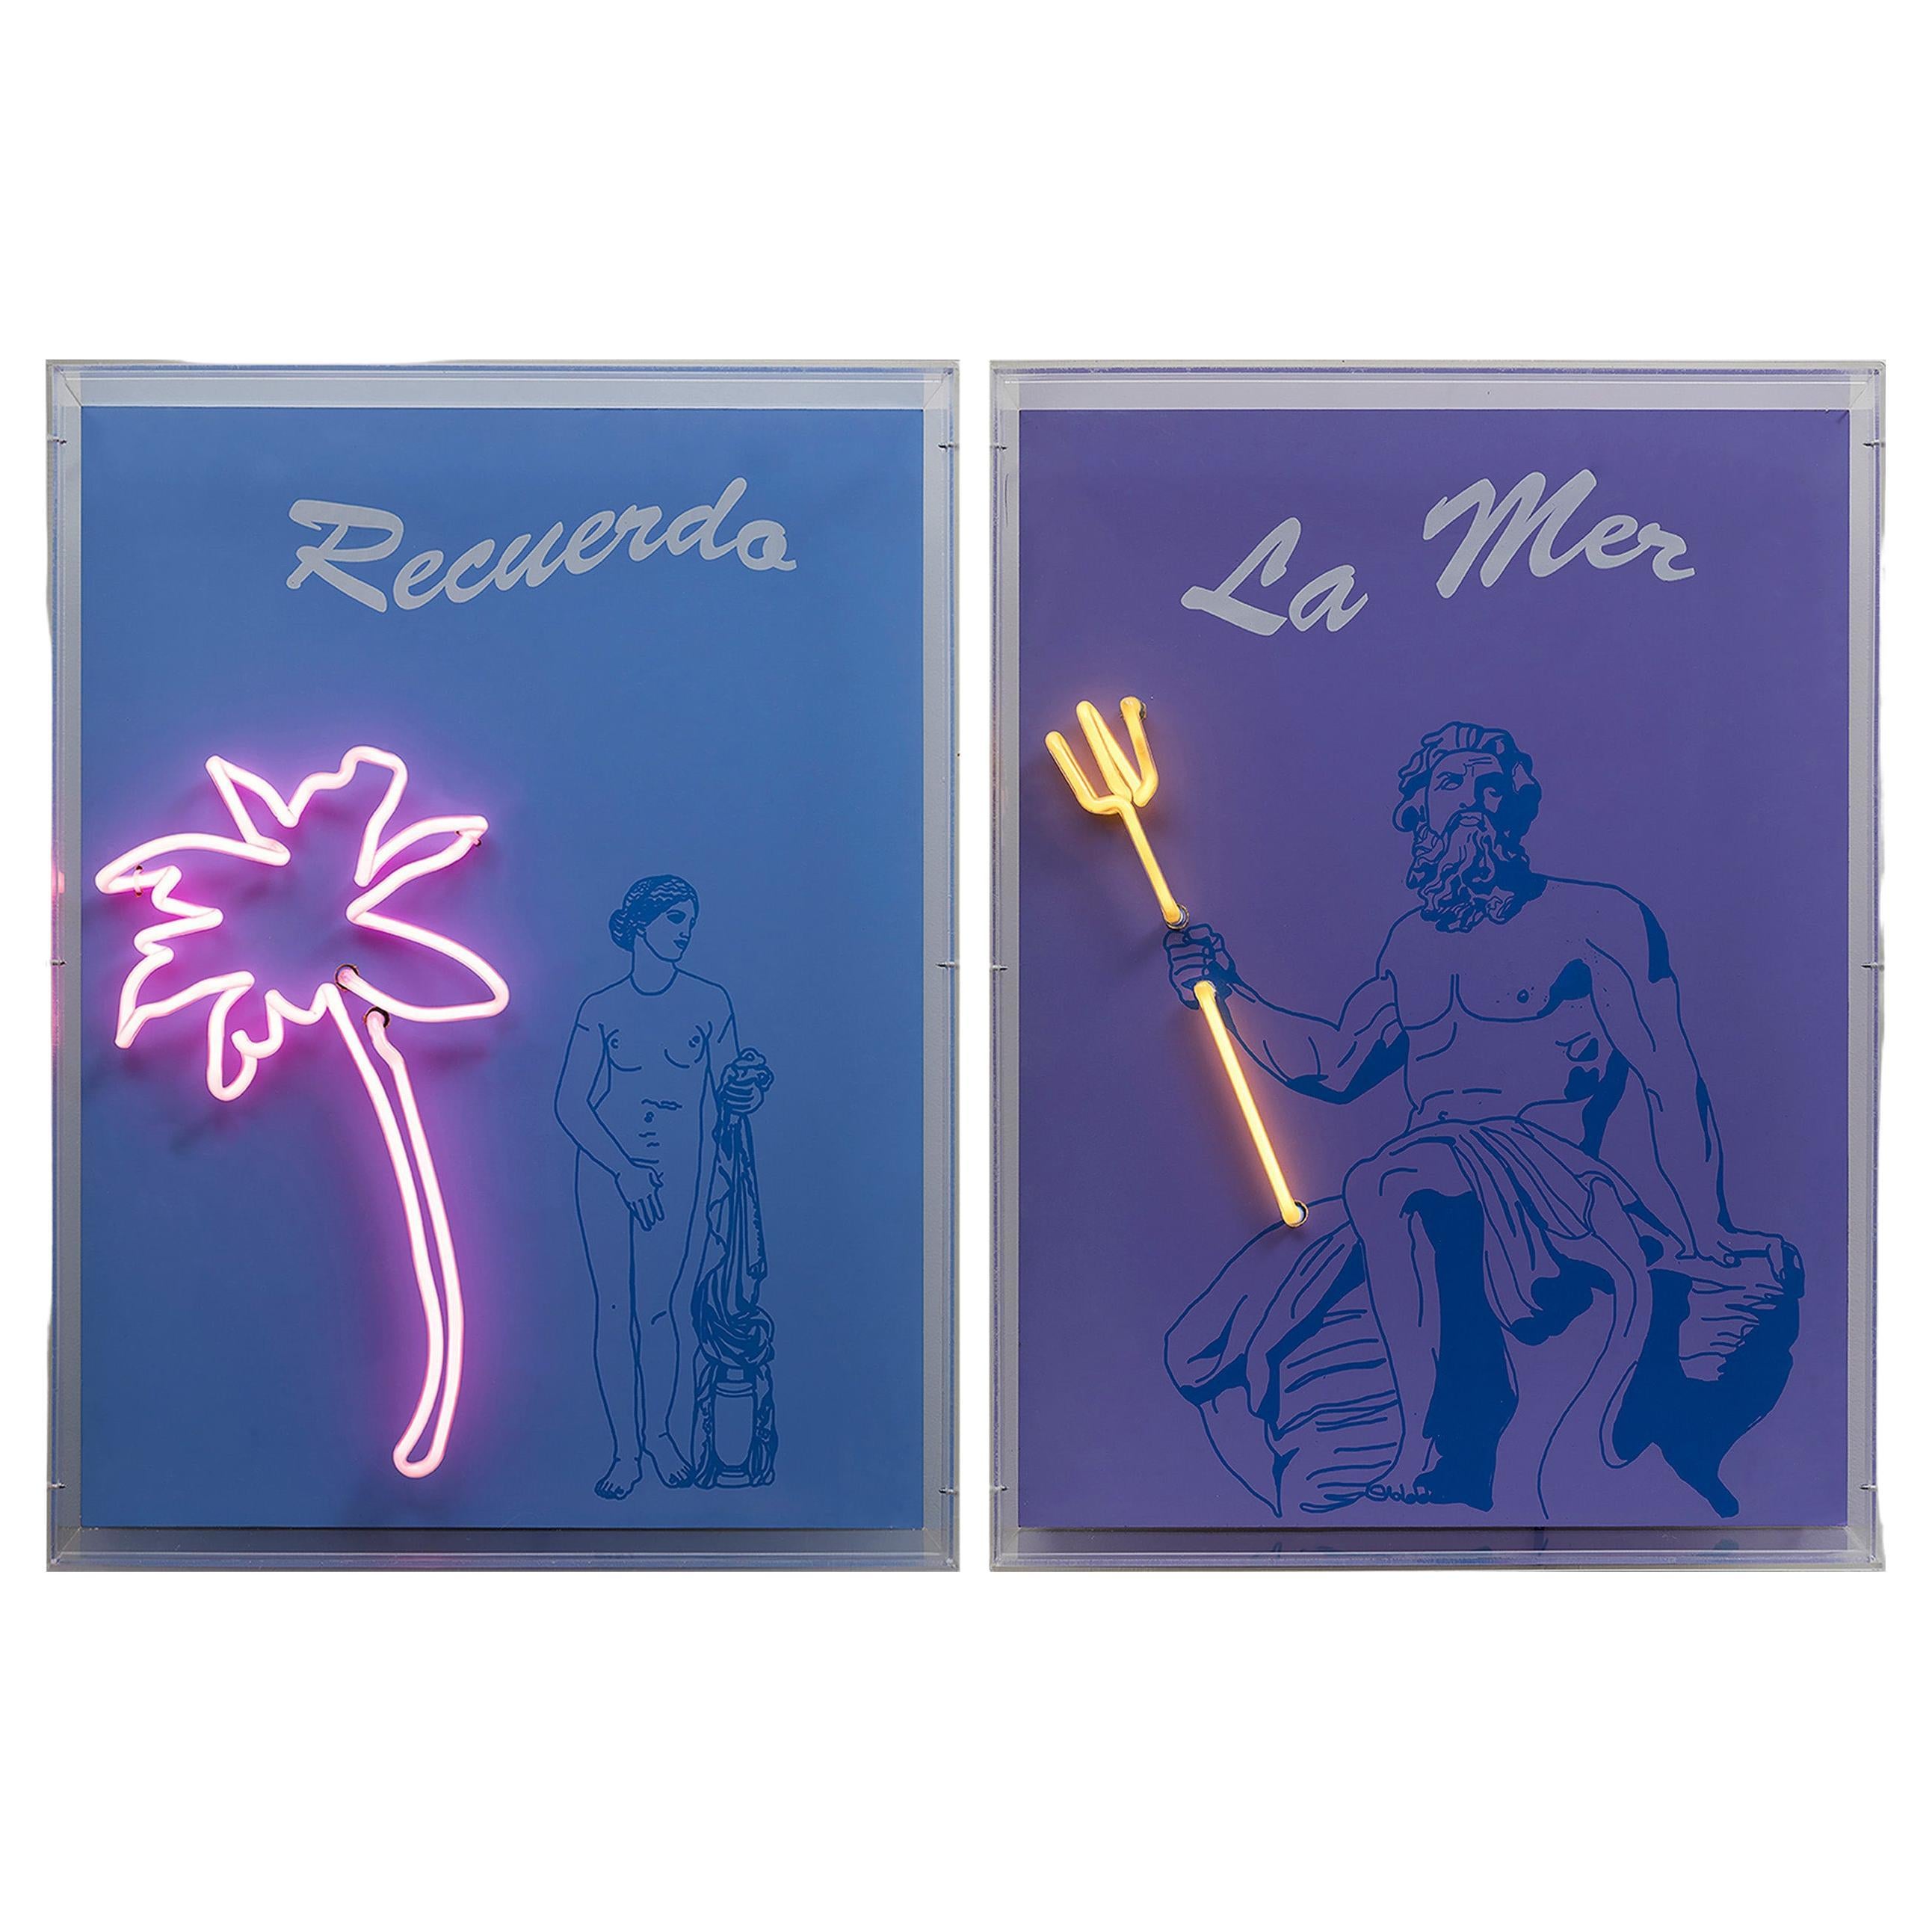 Recuerdo Aphrodite and La Mer Poseidon Diptych. Neon Light Box Wall Sculpture.  For Sale